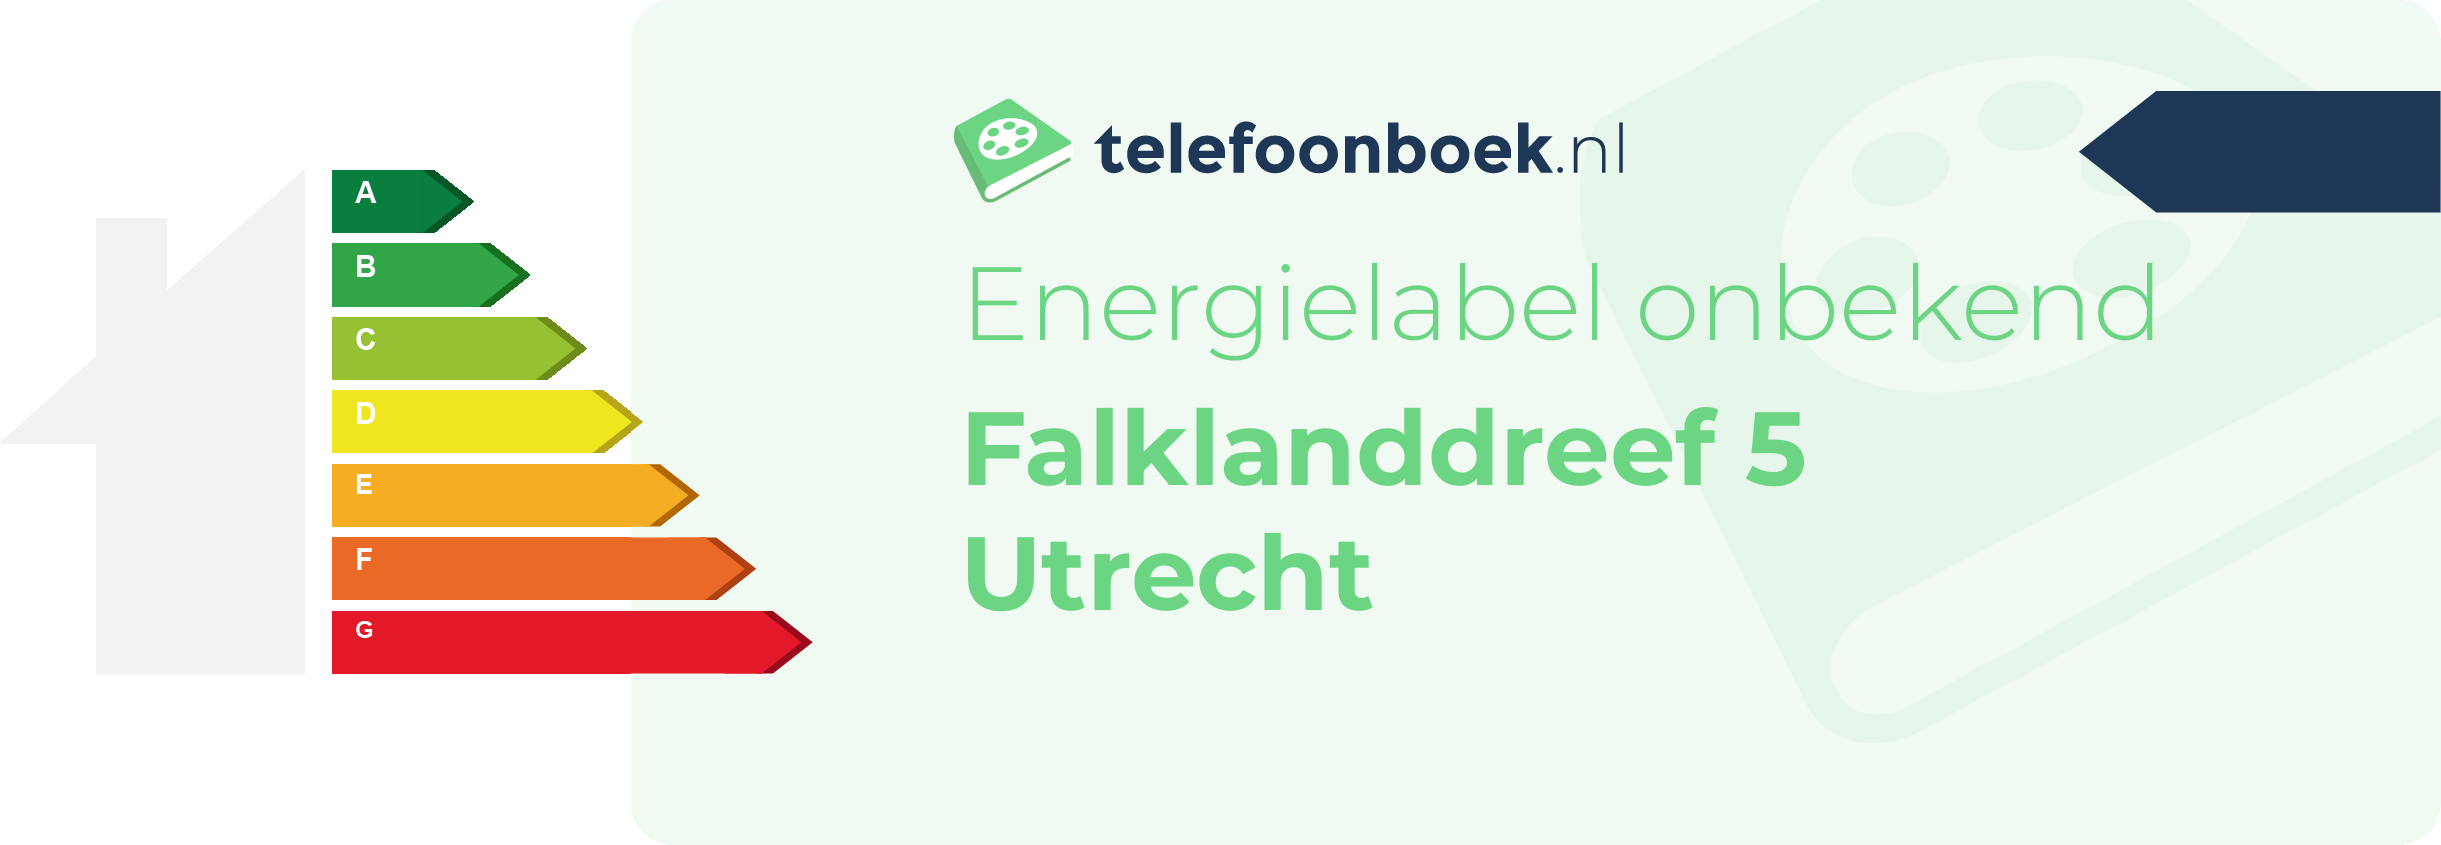 Energielabel Falklanddreef 5 Utrecht